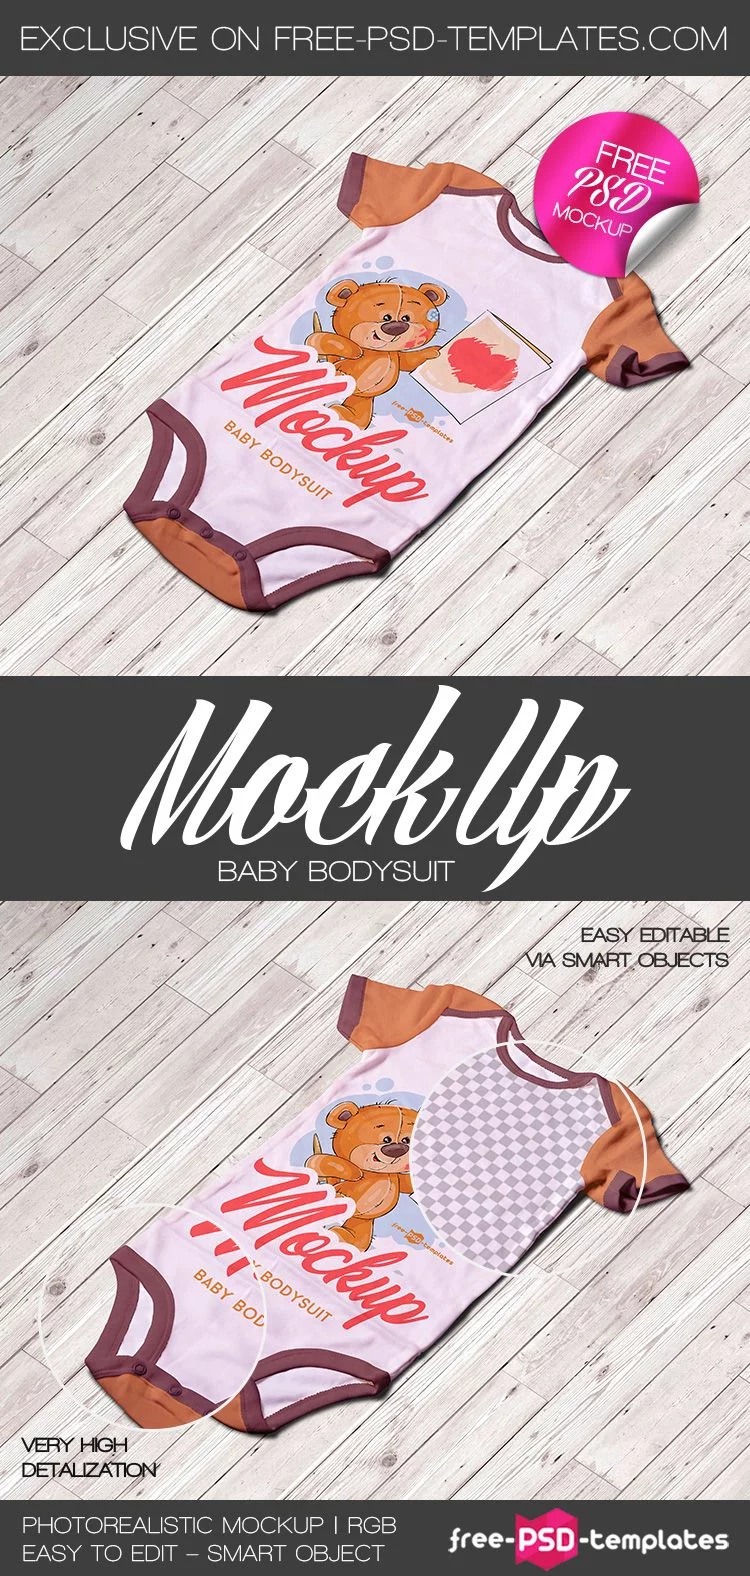 Free Baby Bodysuit Mock-up in PSD